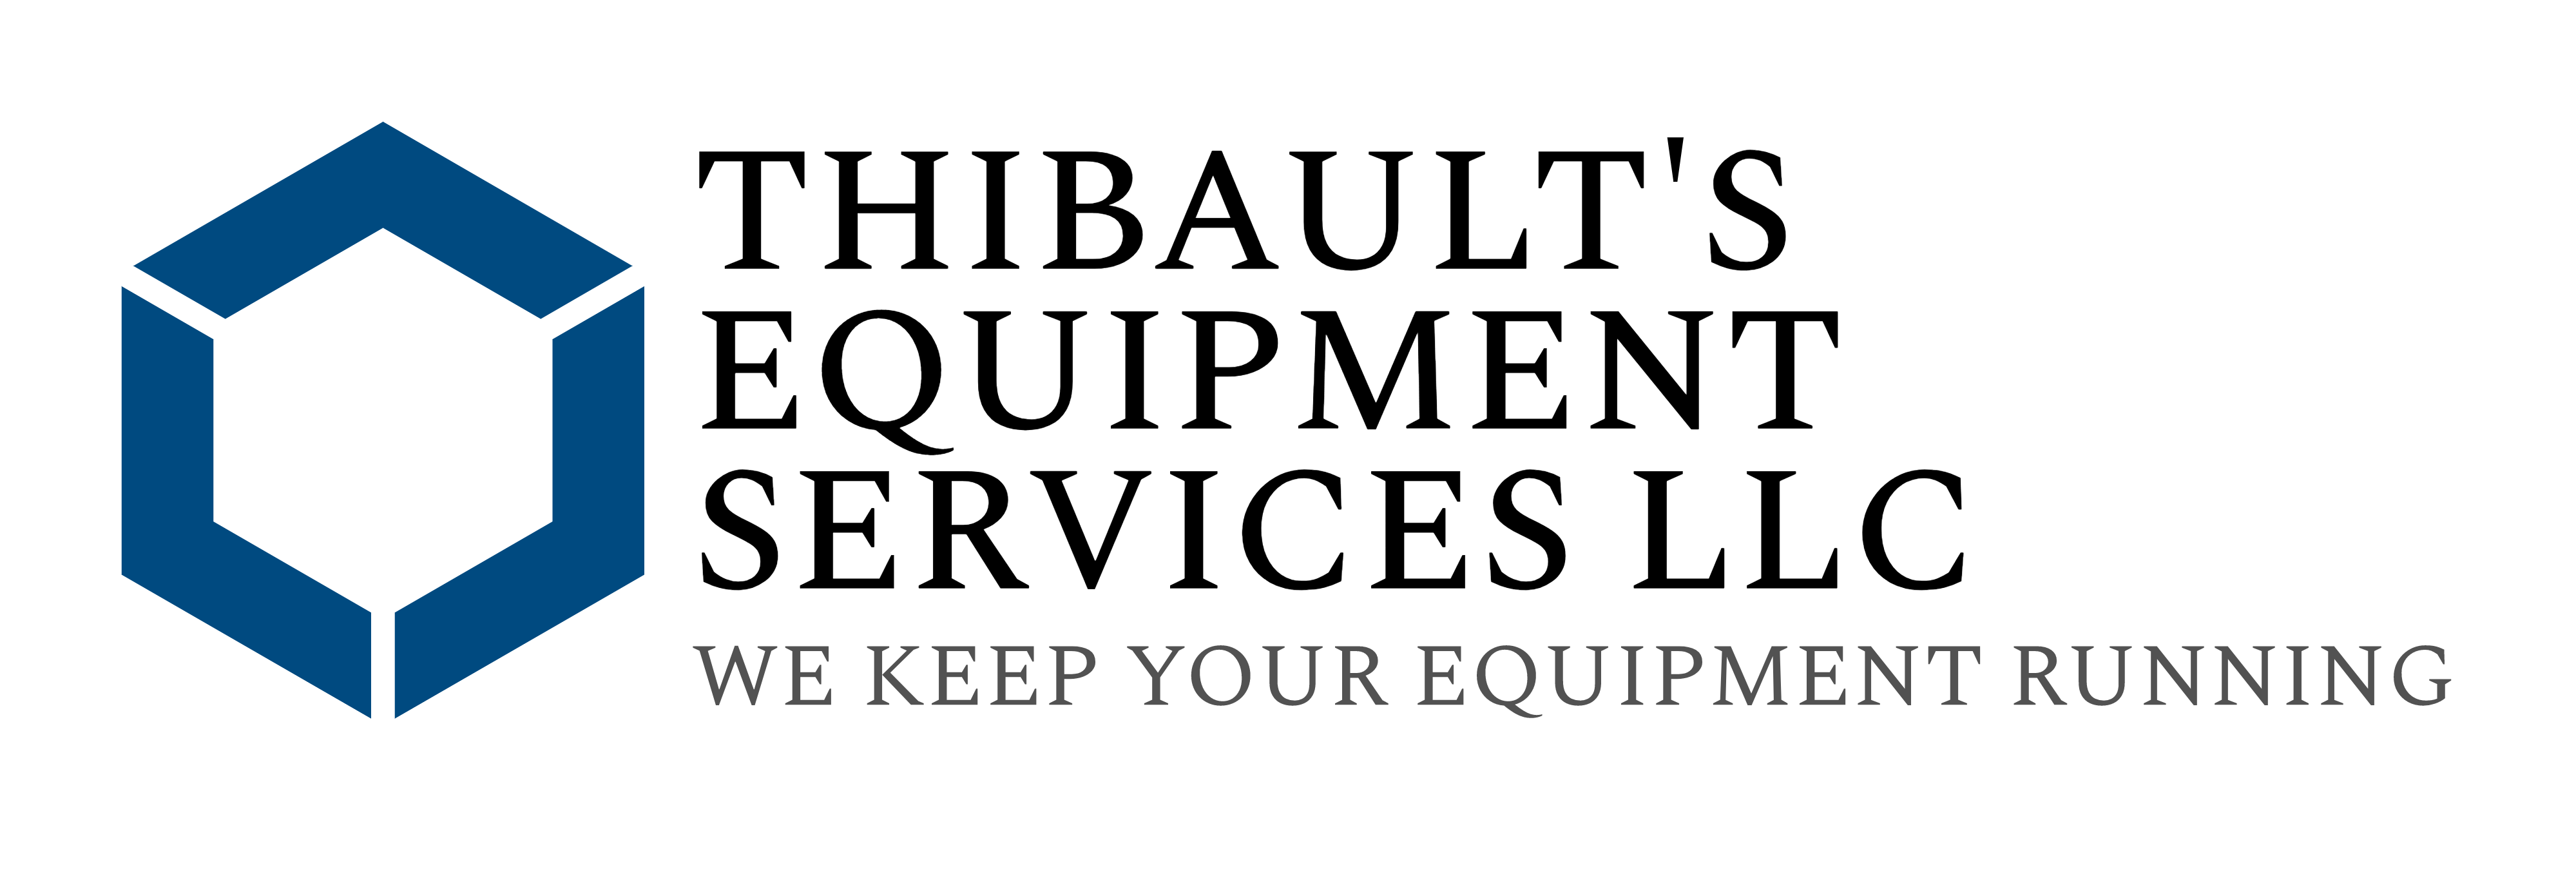 Thibault's Equipment Services